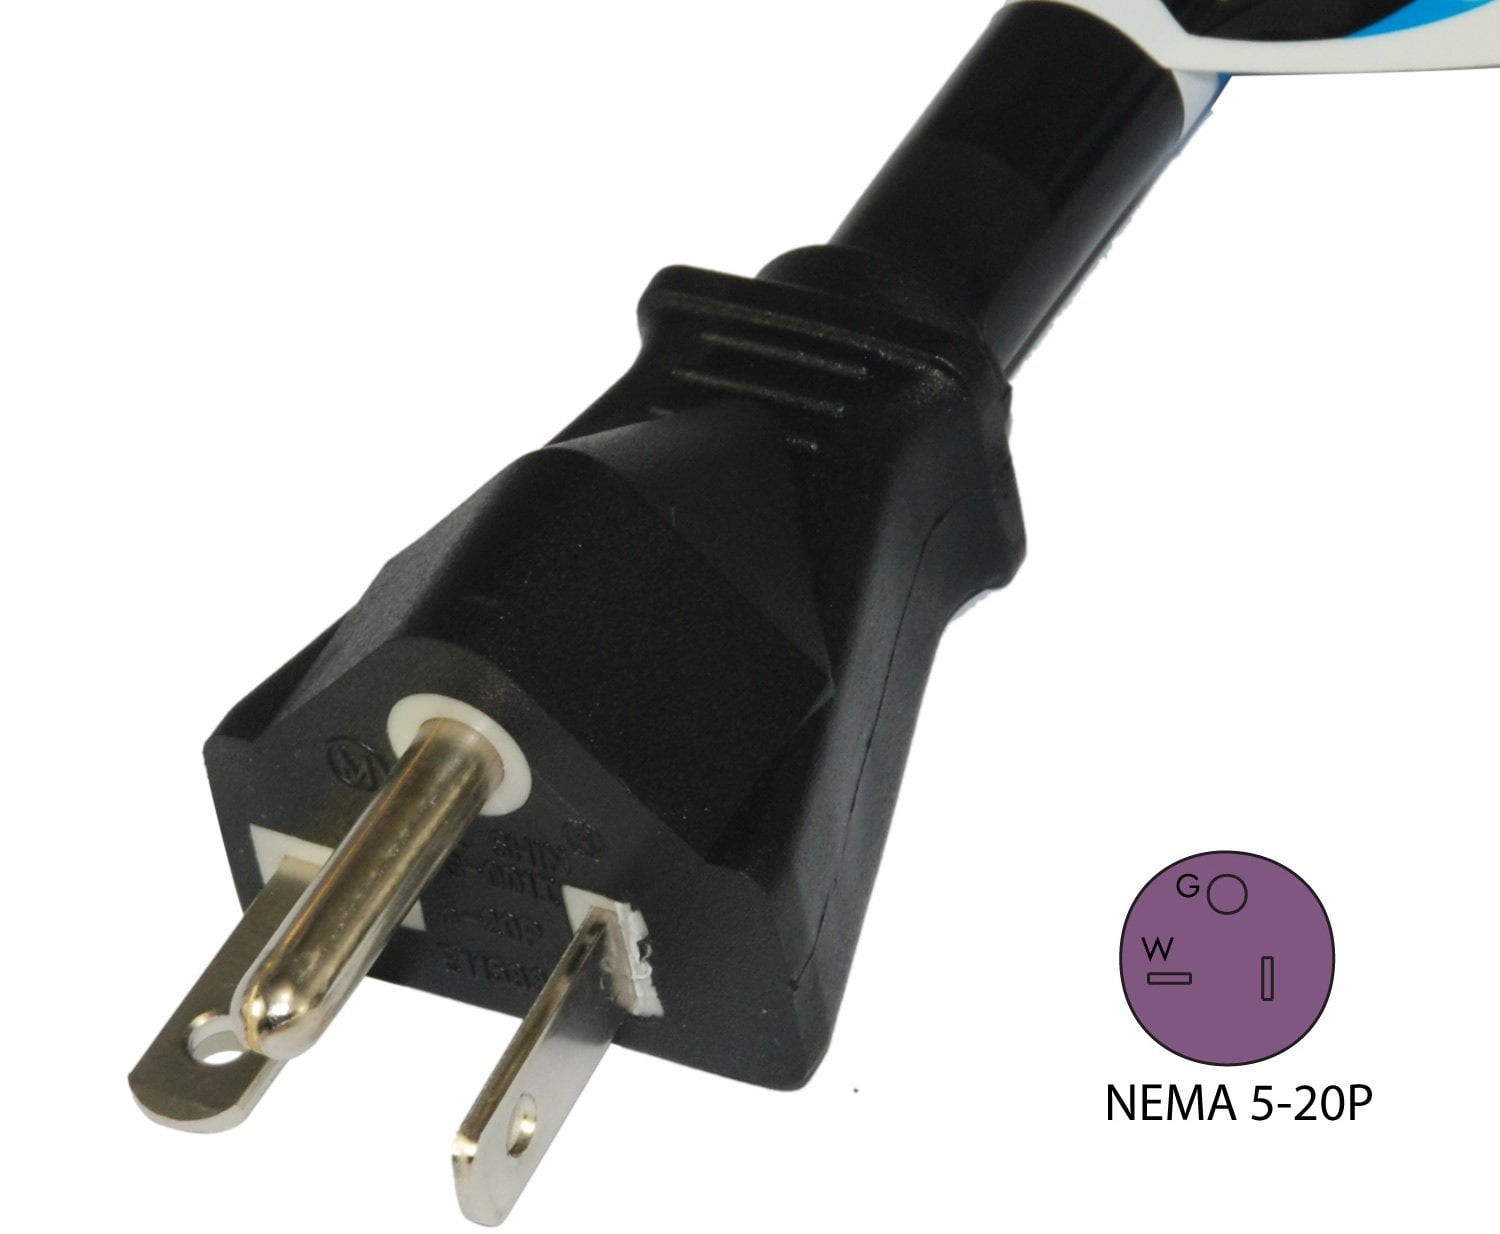 NEMA 5-20 Extension Cord 25 ft 20A/125V 12 AWG Iron Box # IBX-1010-25 